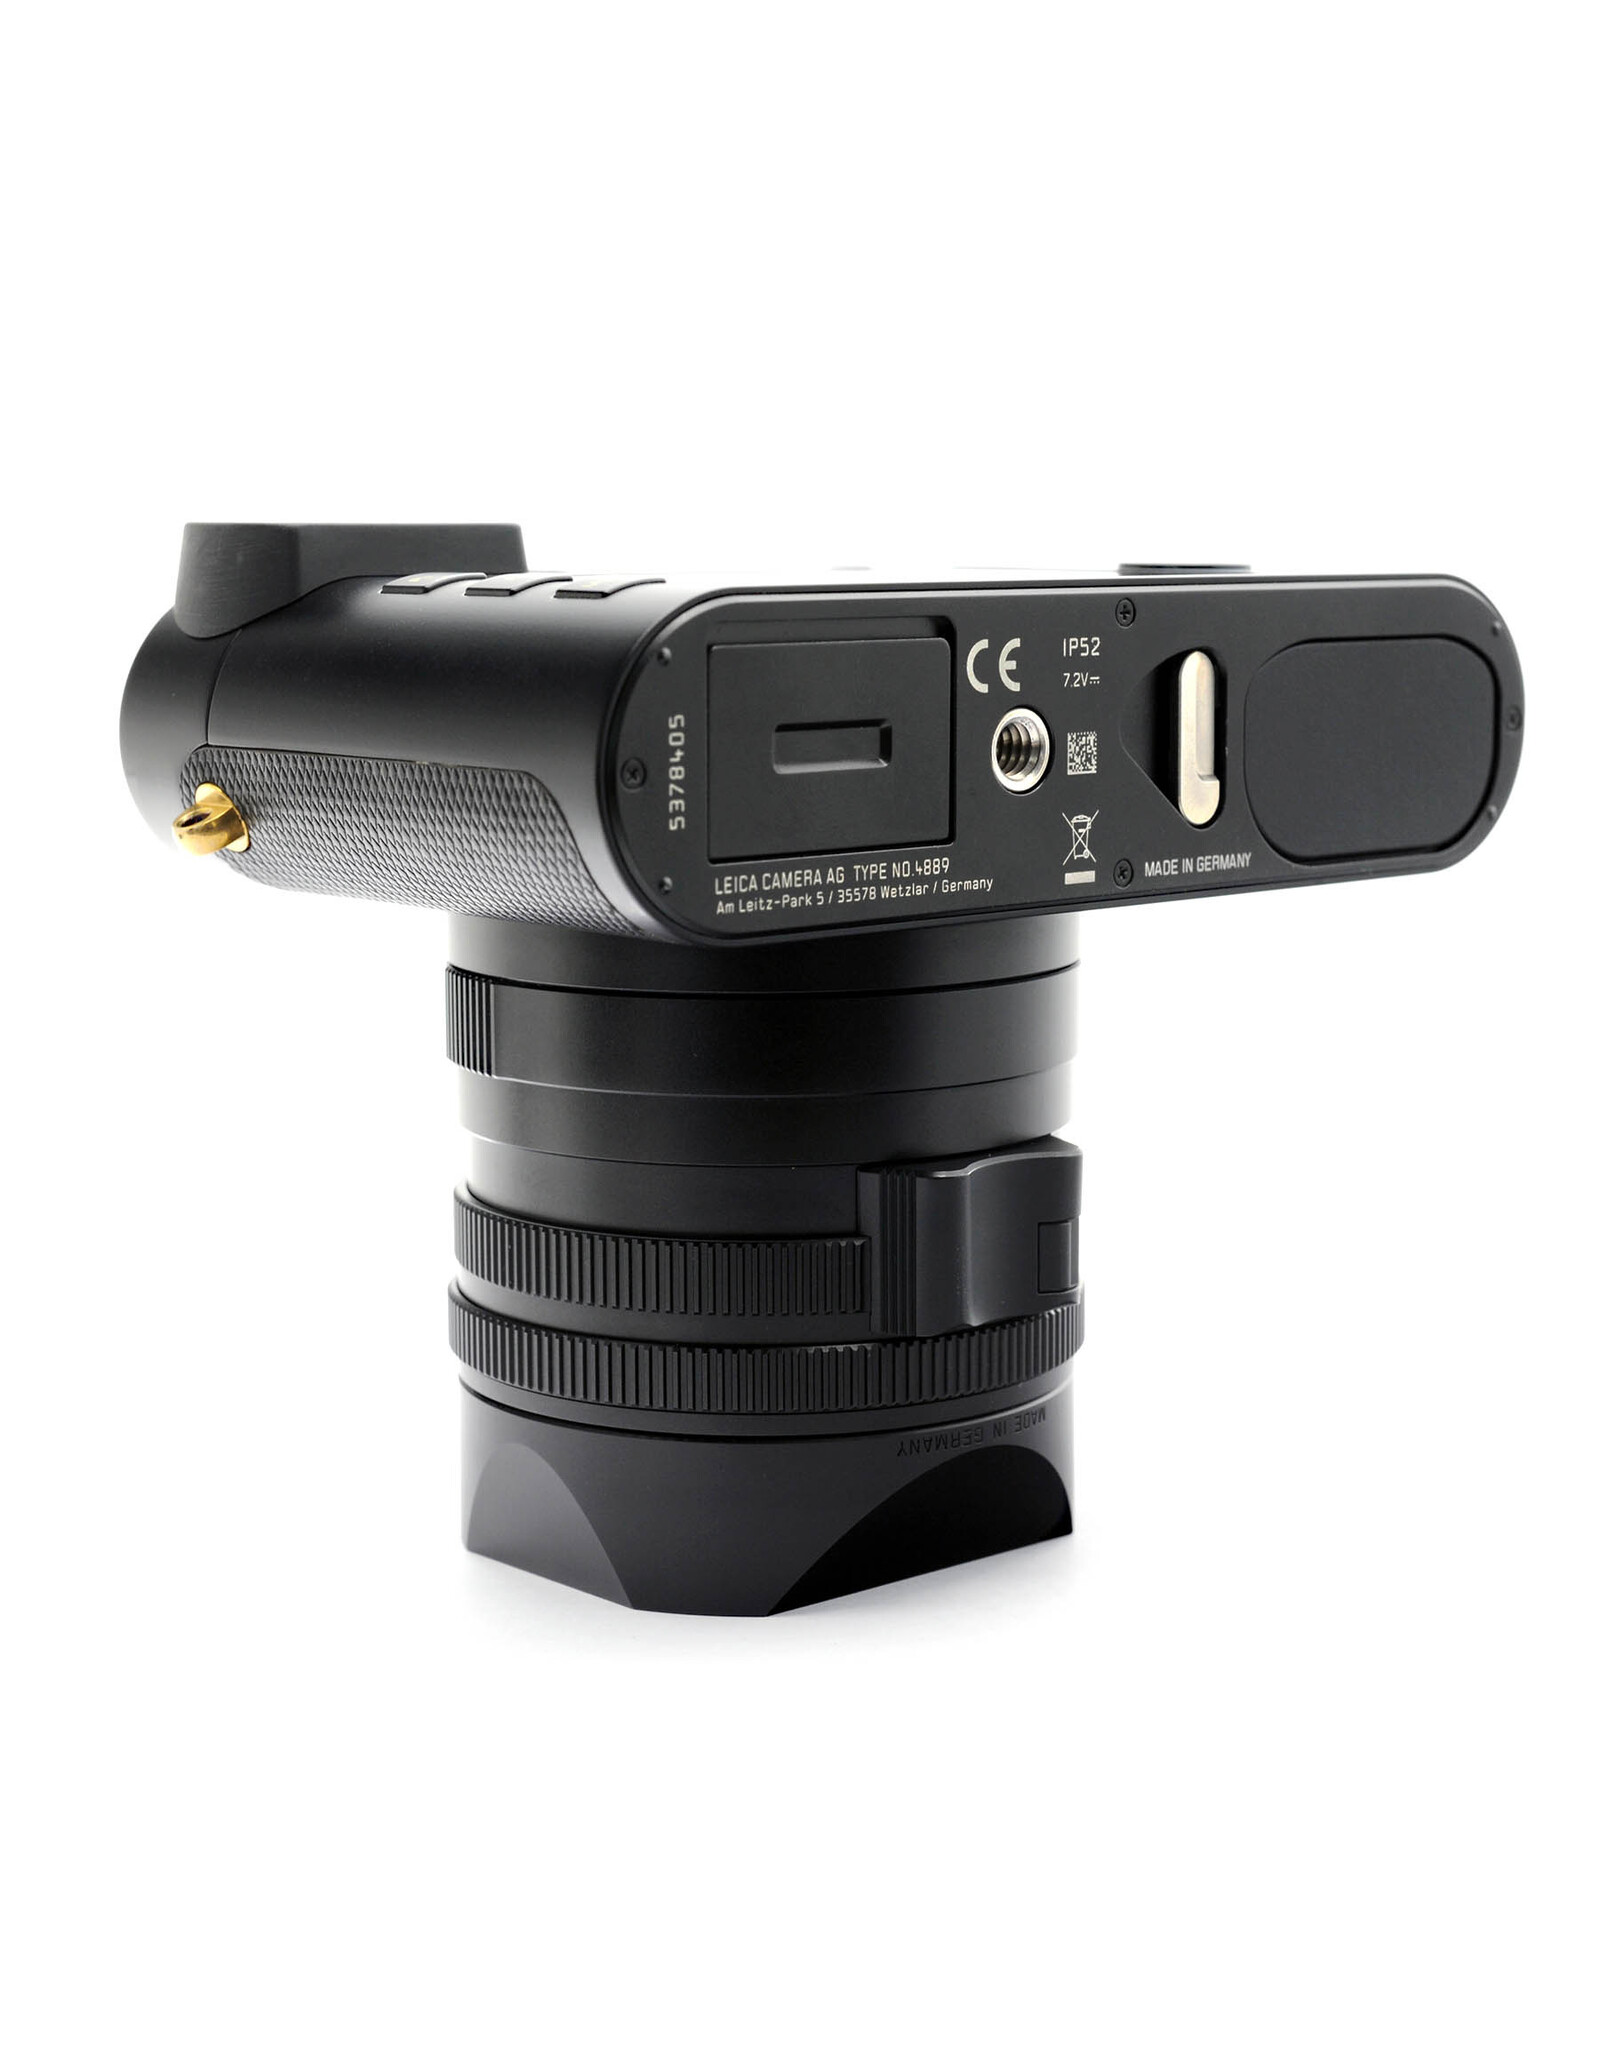 Leica Leica Q2 Daniel Craig x Greg Williams Limited Edition (705/750)    ALC145101